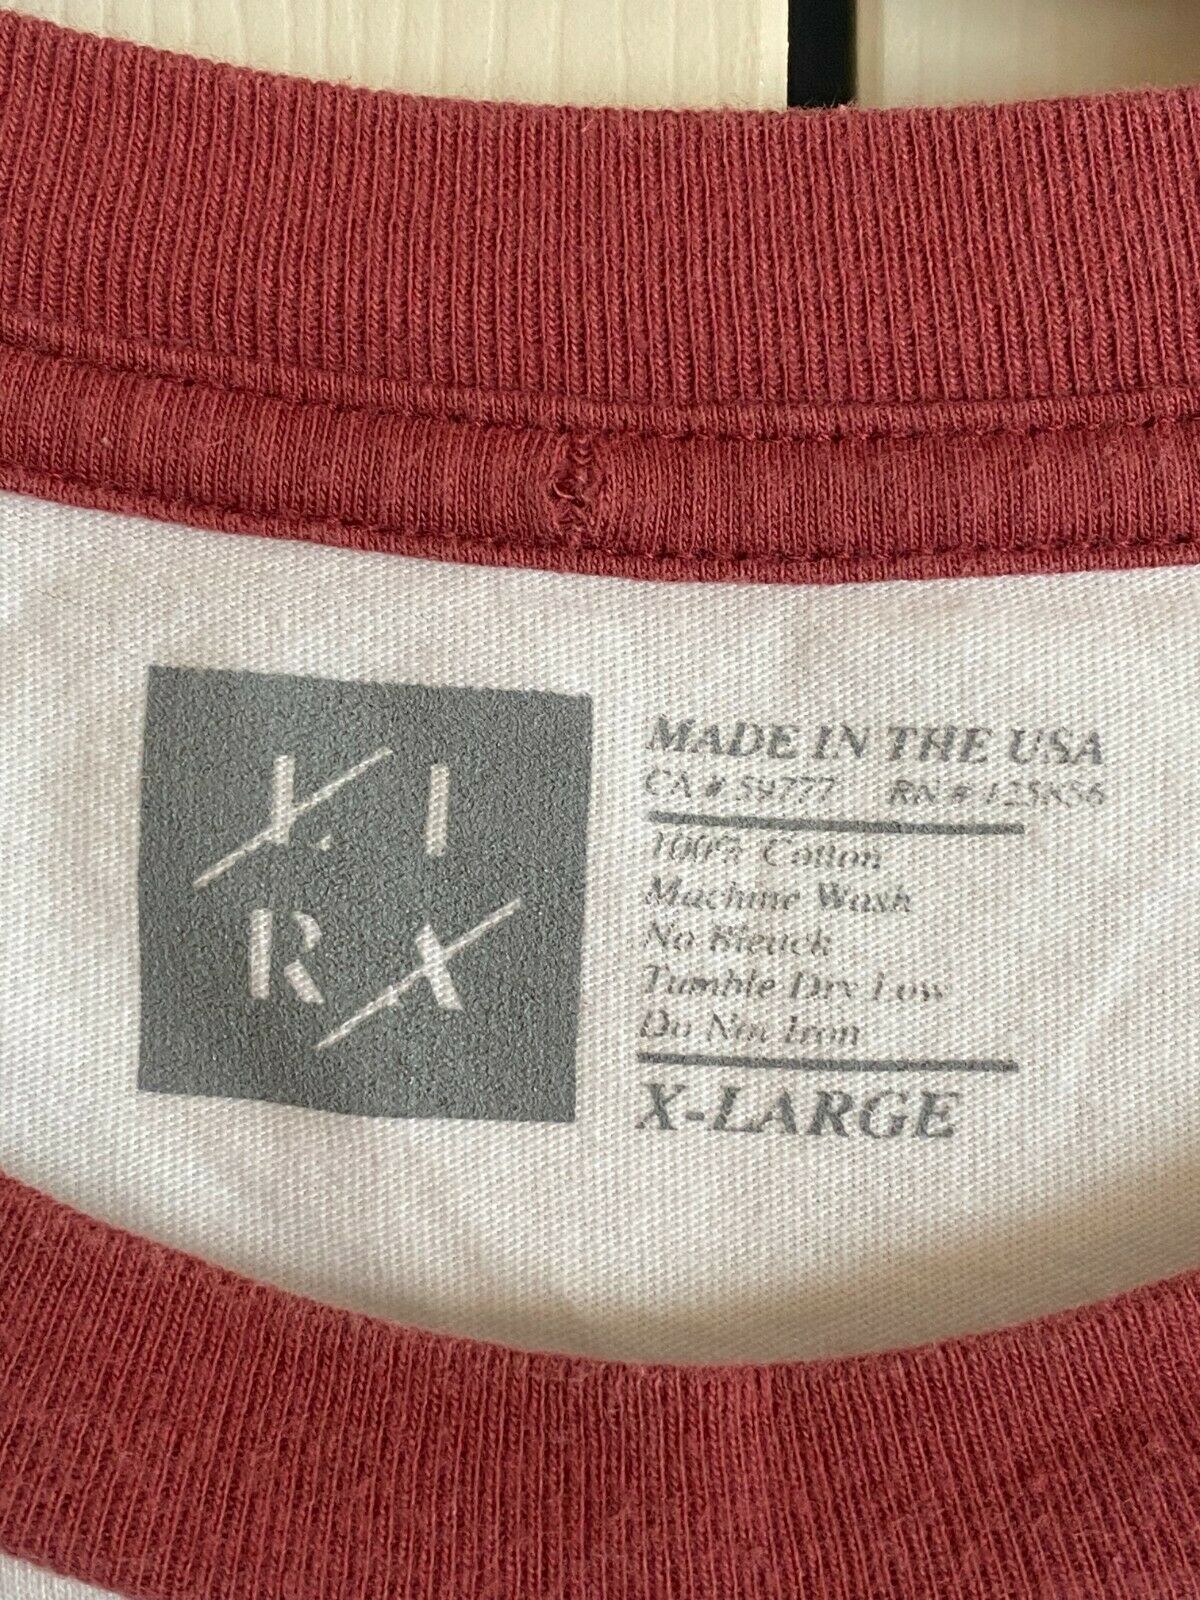 Made In USA LIRX Tropical XL X-Large Short Sleeve Pocket T-shirt White Gray Brn